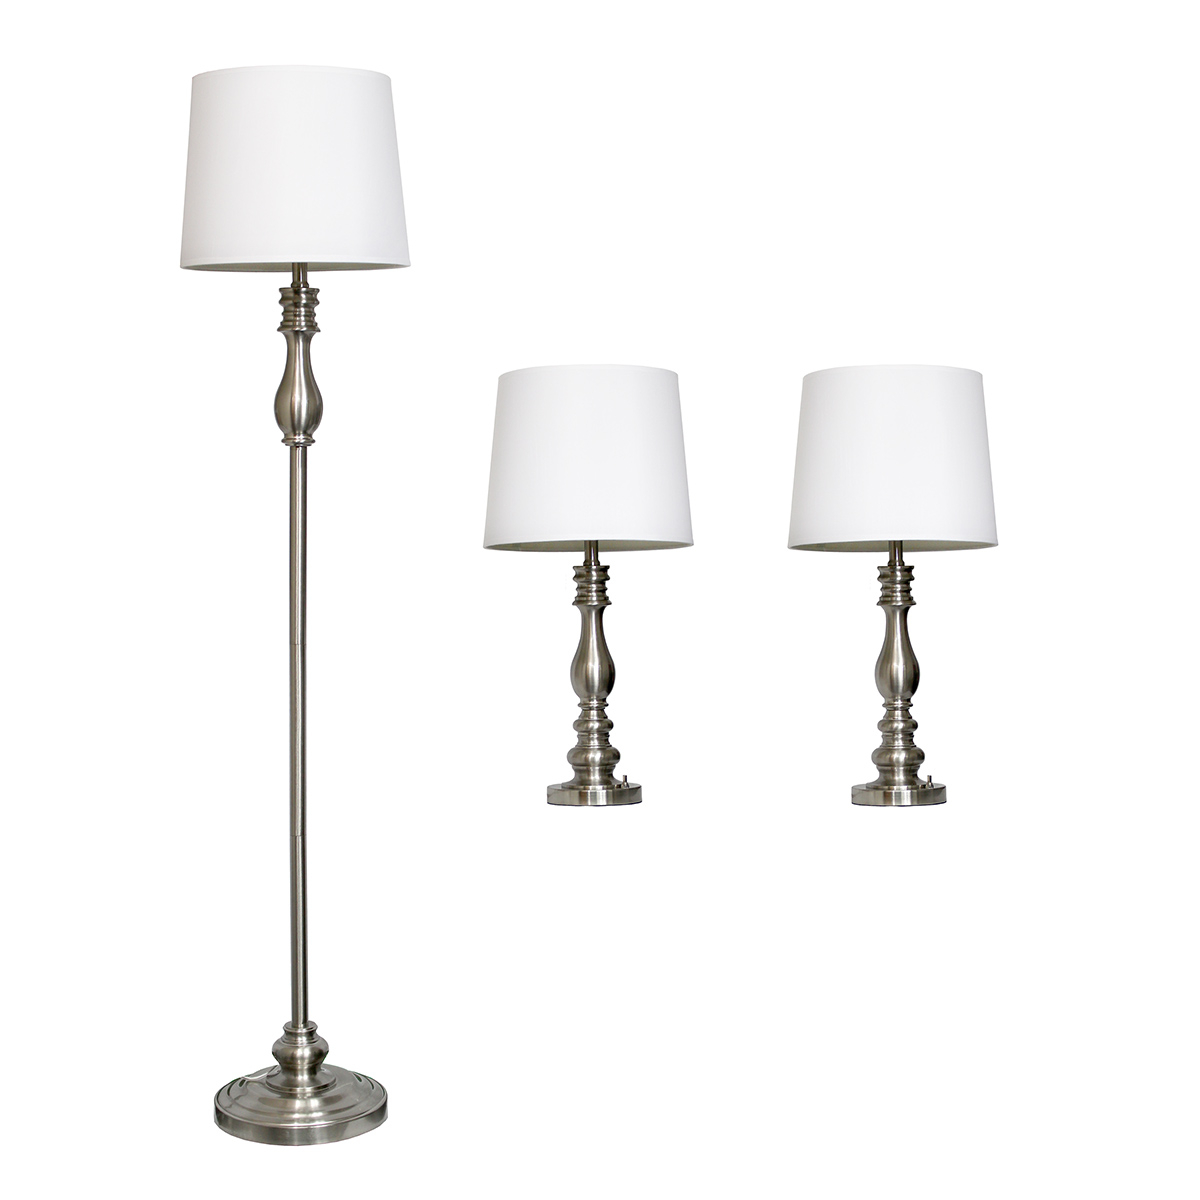 Elegant Designs Brushed Steel Three Pack Lamp Set 2 Table Lamps 1 Floor Lamp throughout sizing 1200 X 1200